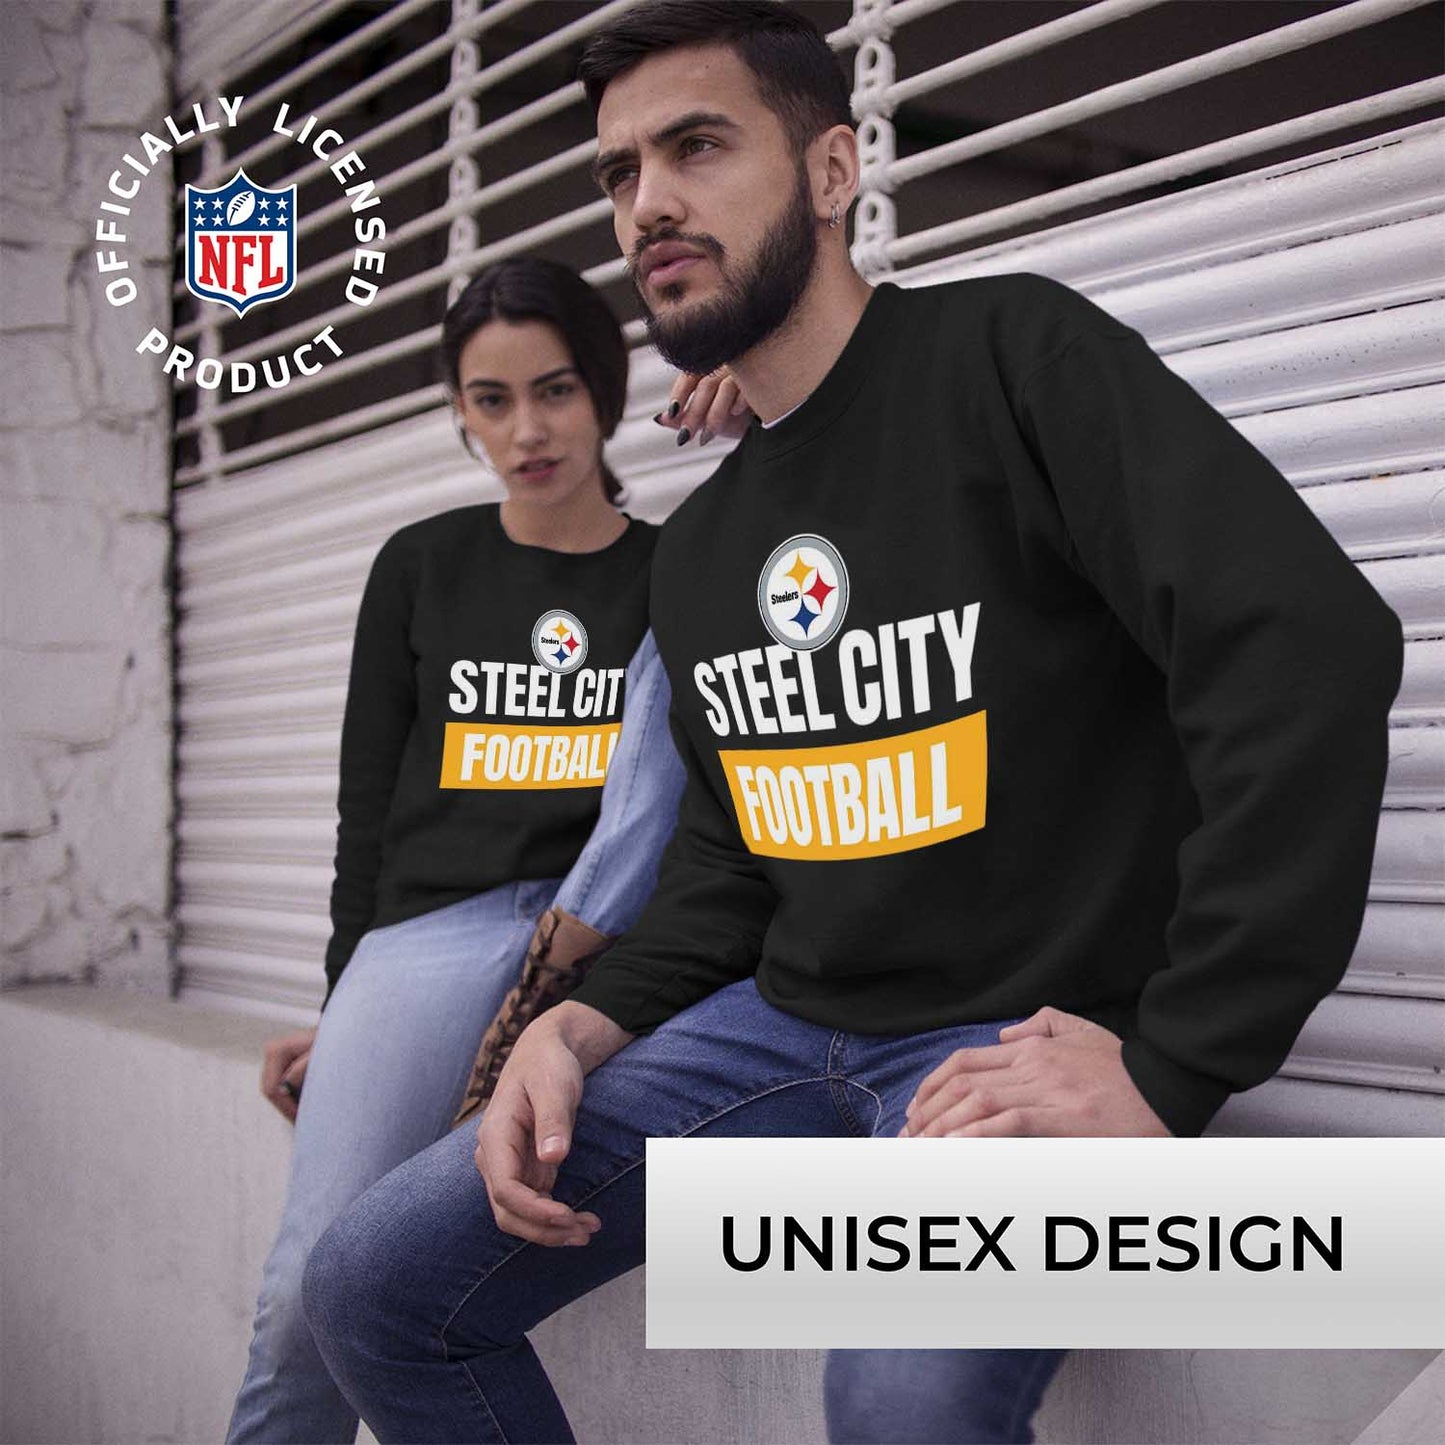 Pittsburgh Steelers NFL Adult Slogan Crewneck Sweatshirt - Black